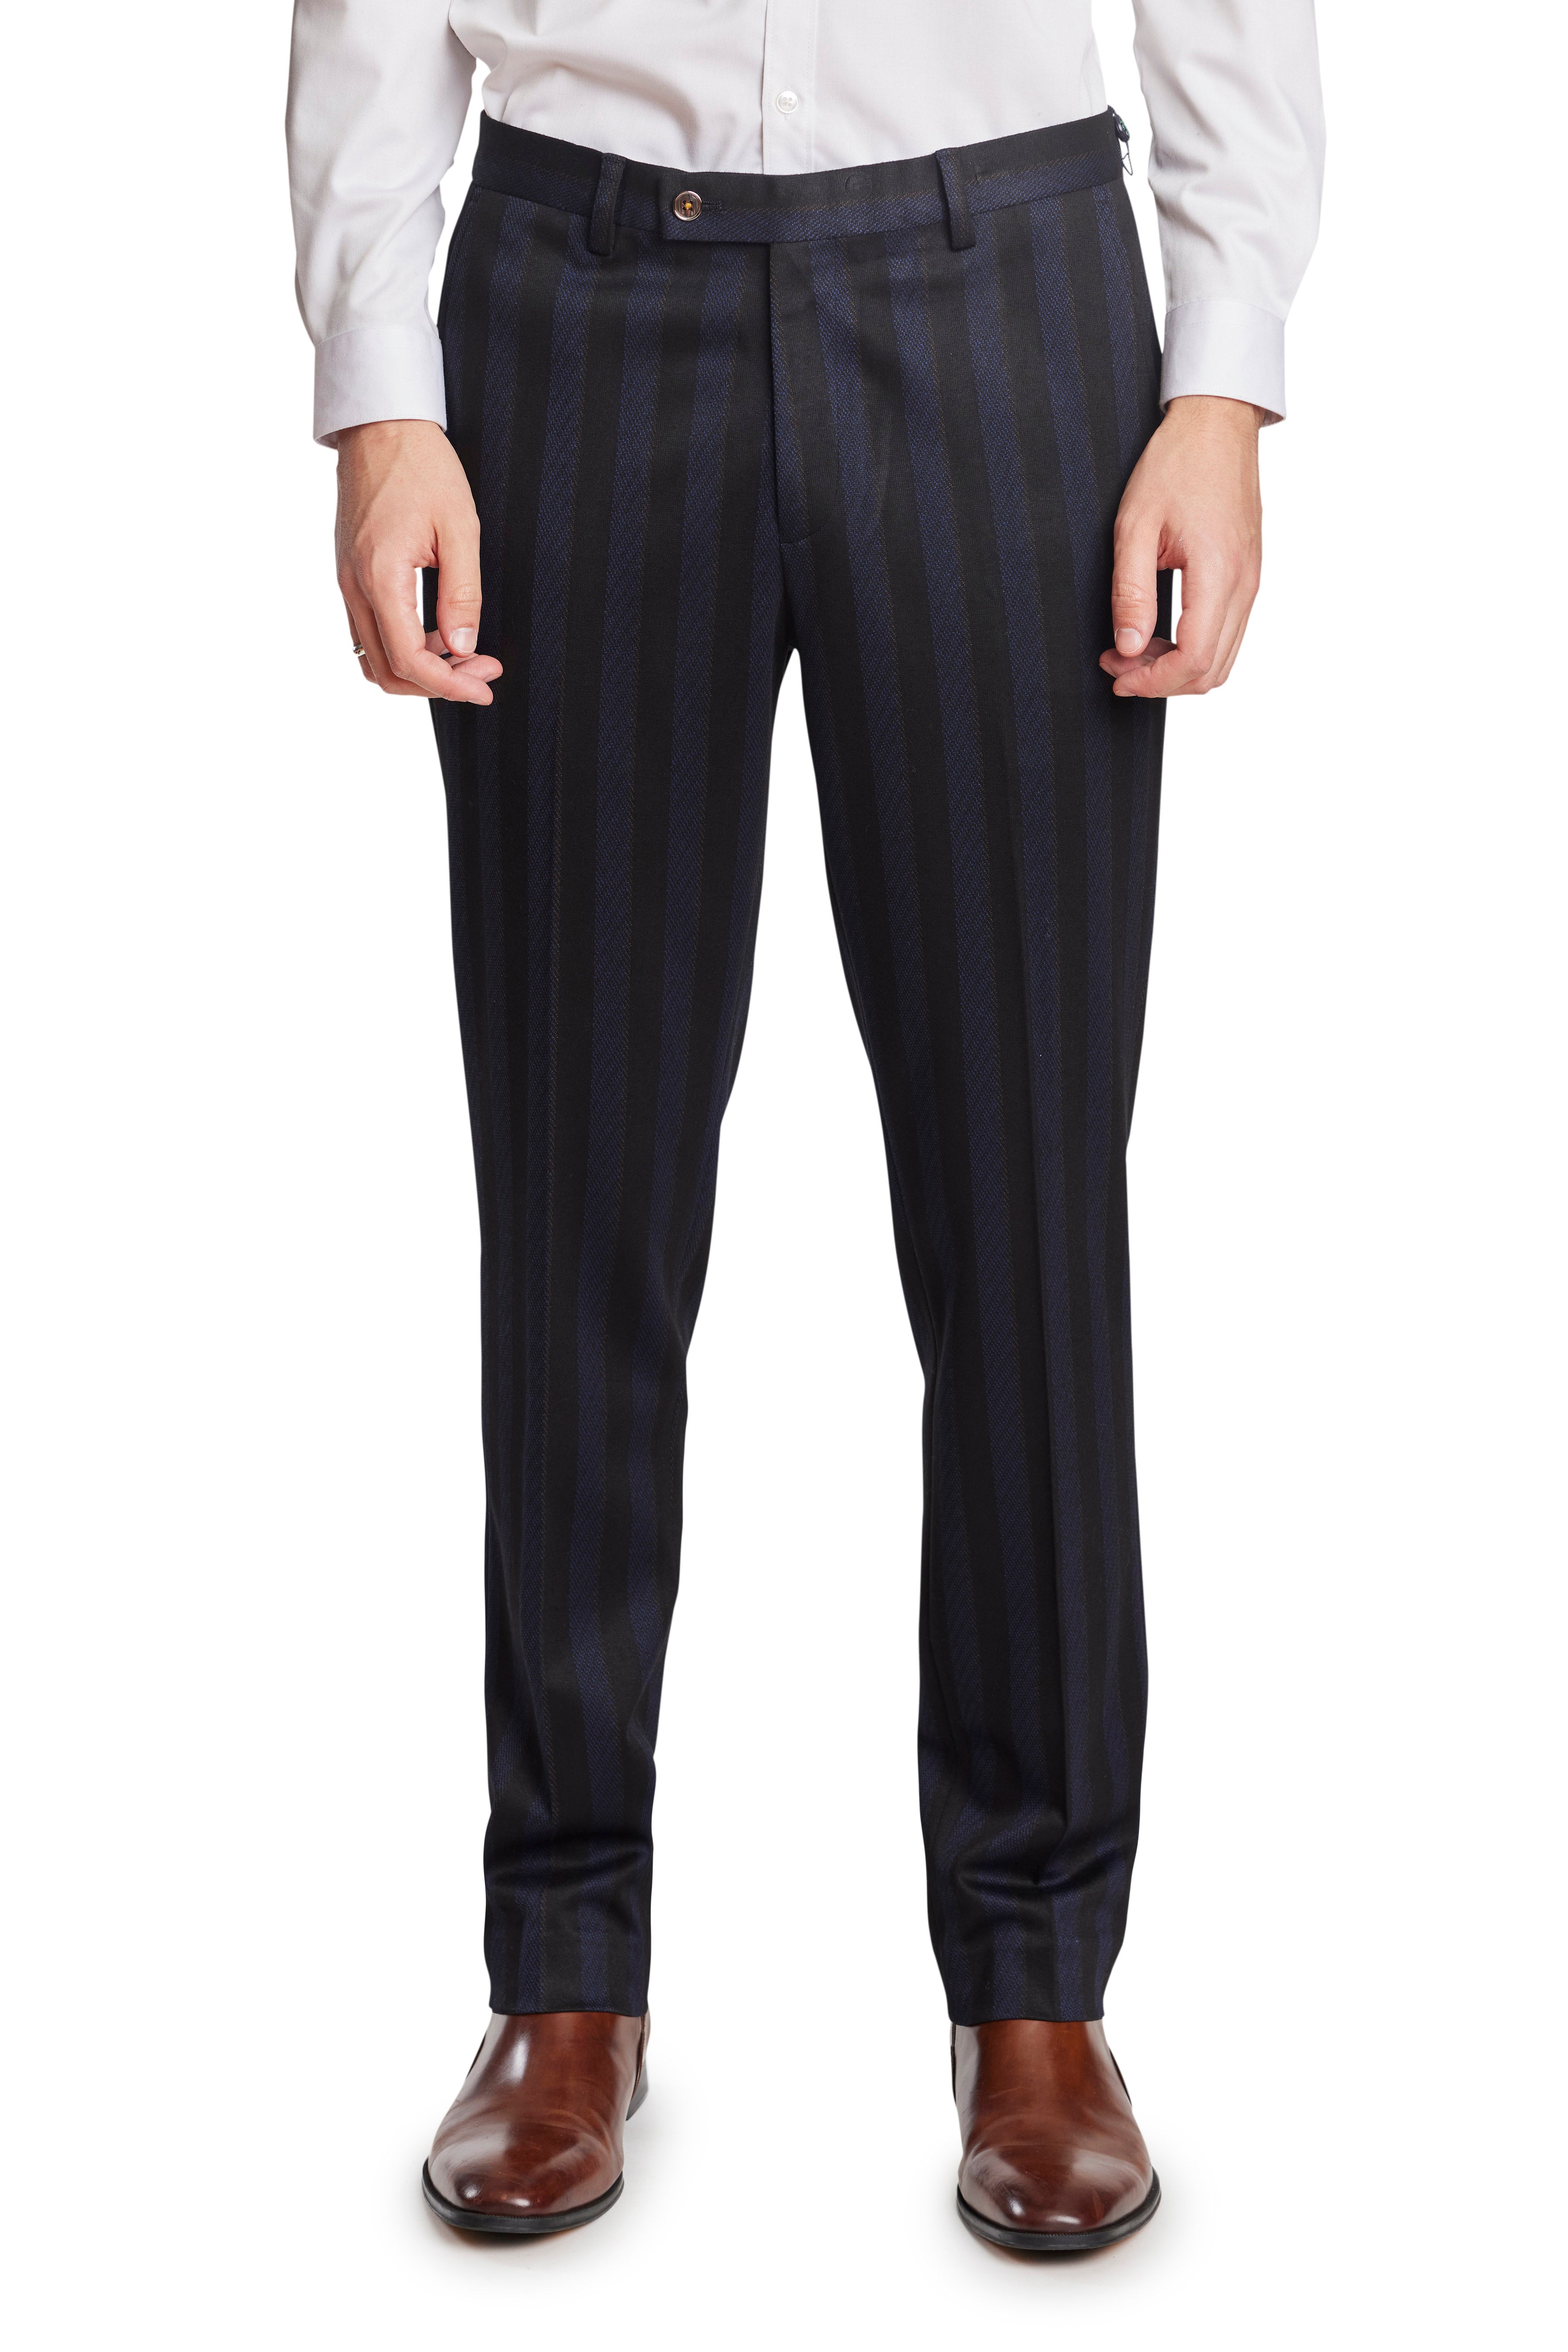 Buy Men Black Stripe Regular Fit Trousers Online - 703126 | Van Heusen